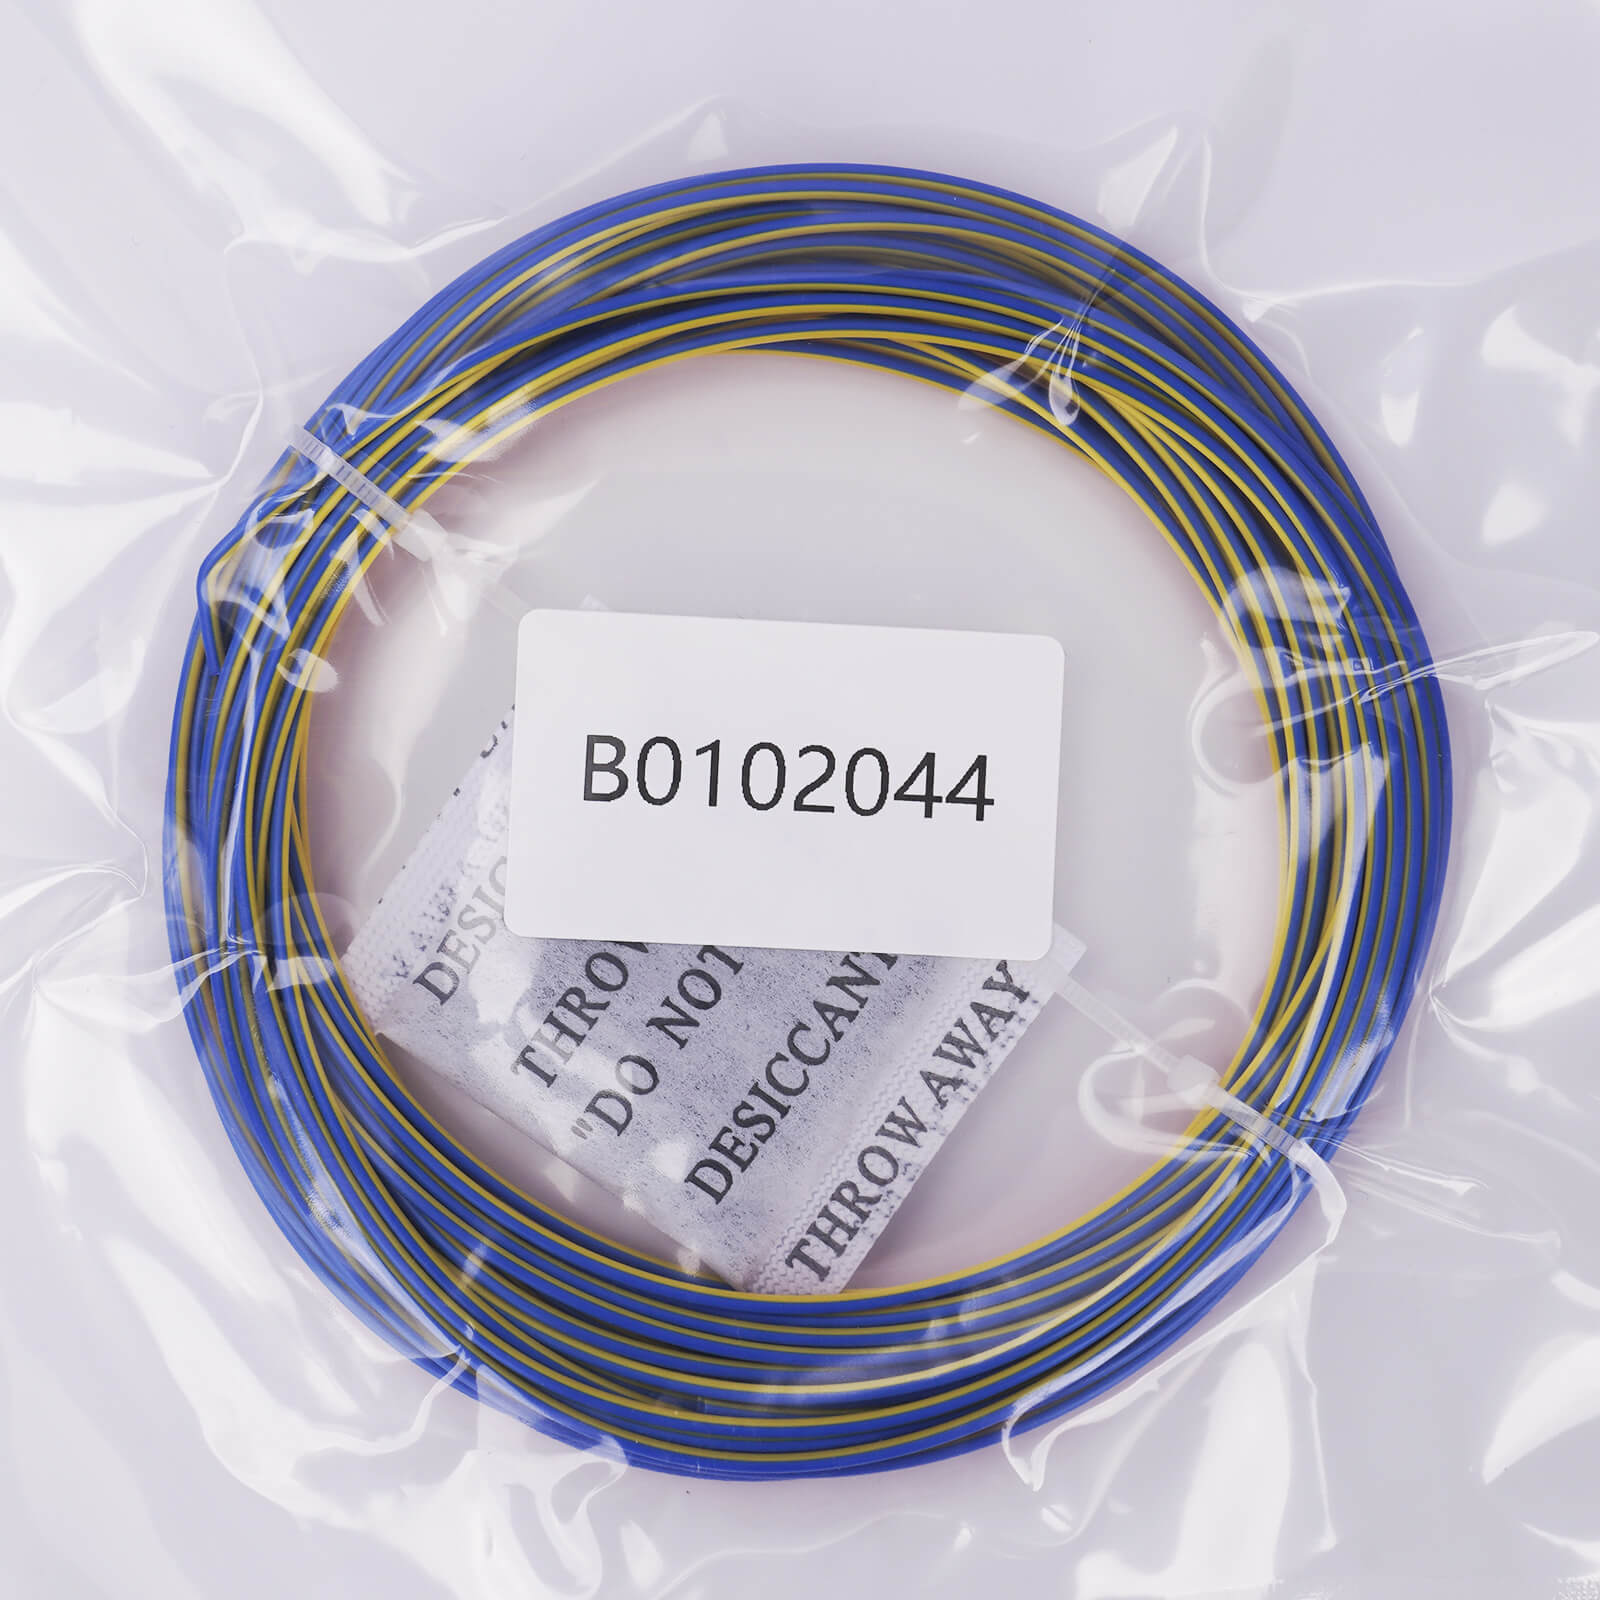 ERYONE Sample 10M Triple-Color Silk PLA Filament,1.75mm,Accuracy +/- 0.03 mm